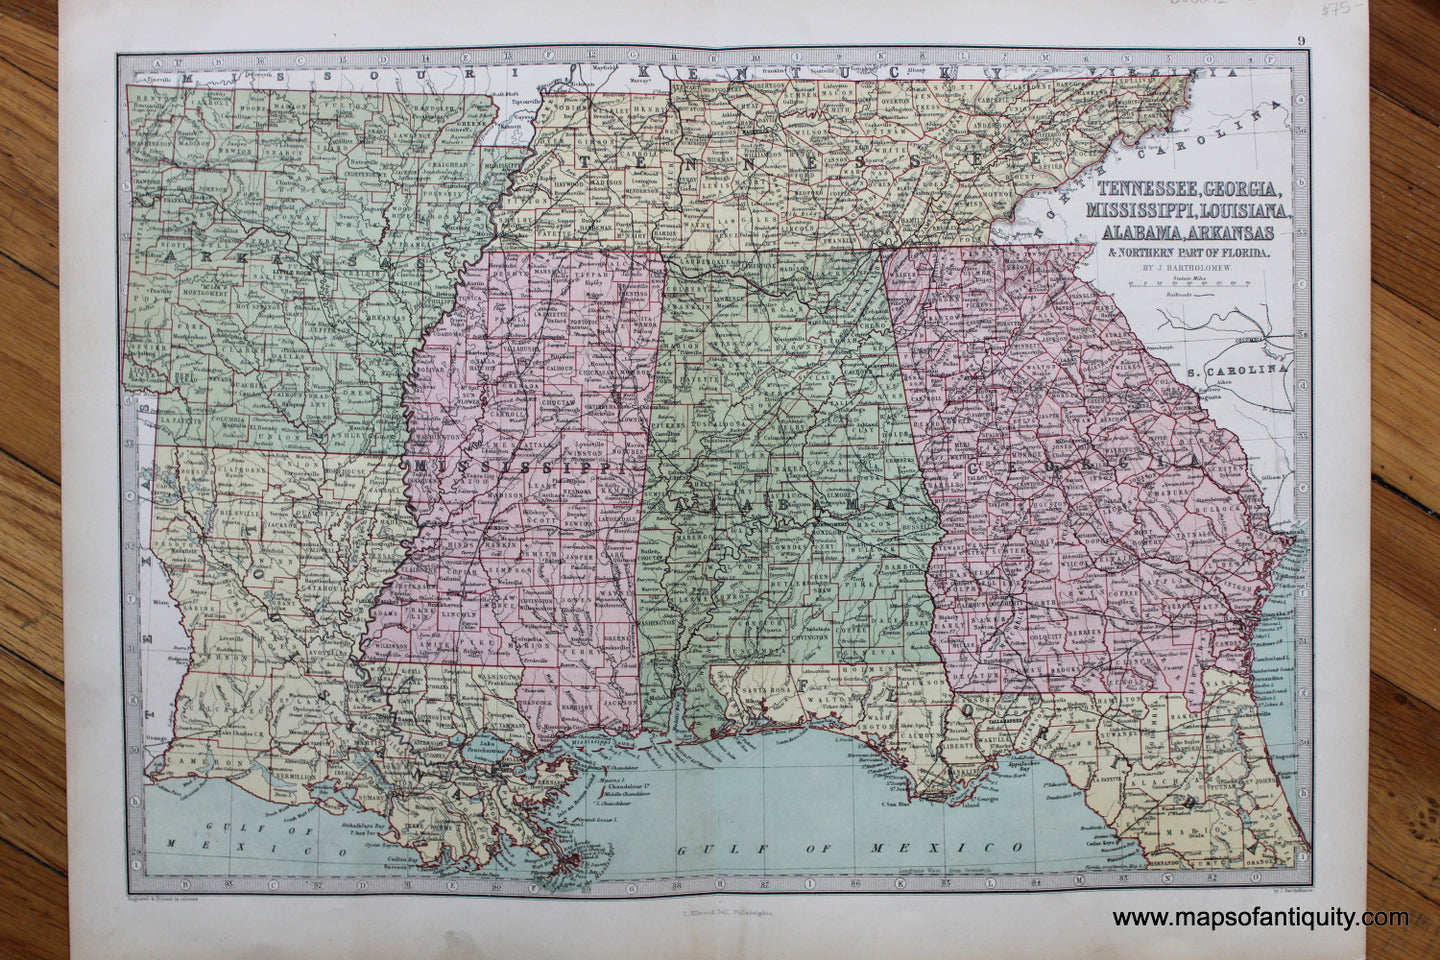 Antique-Printed-Color-Map-Tennessee-Georgia-Mississippi-Louisiana-Alabama-Arkansas-&-Northern-Part-of-Florida.-United-States-South-1873-J.-Bartholomew-Maps-Of-Antiquity